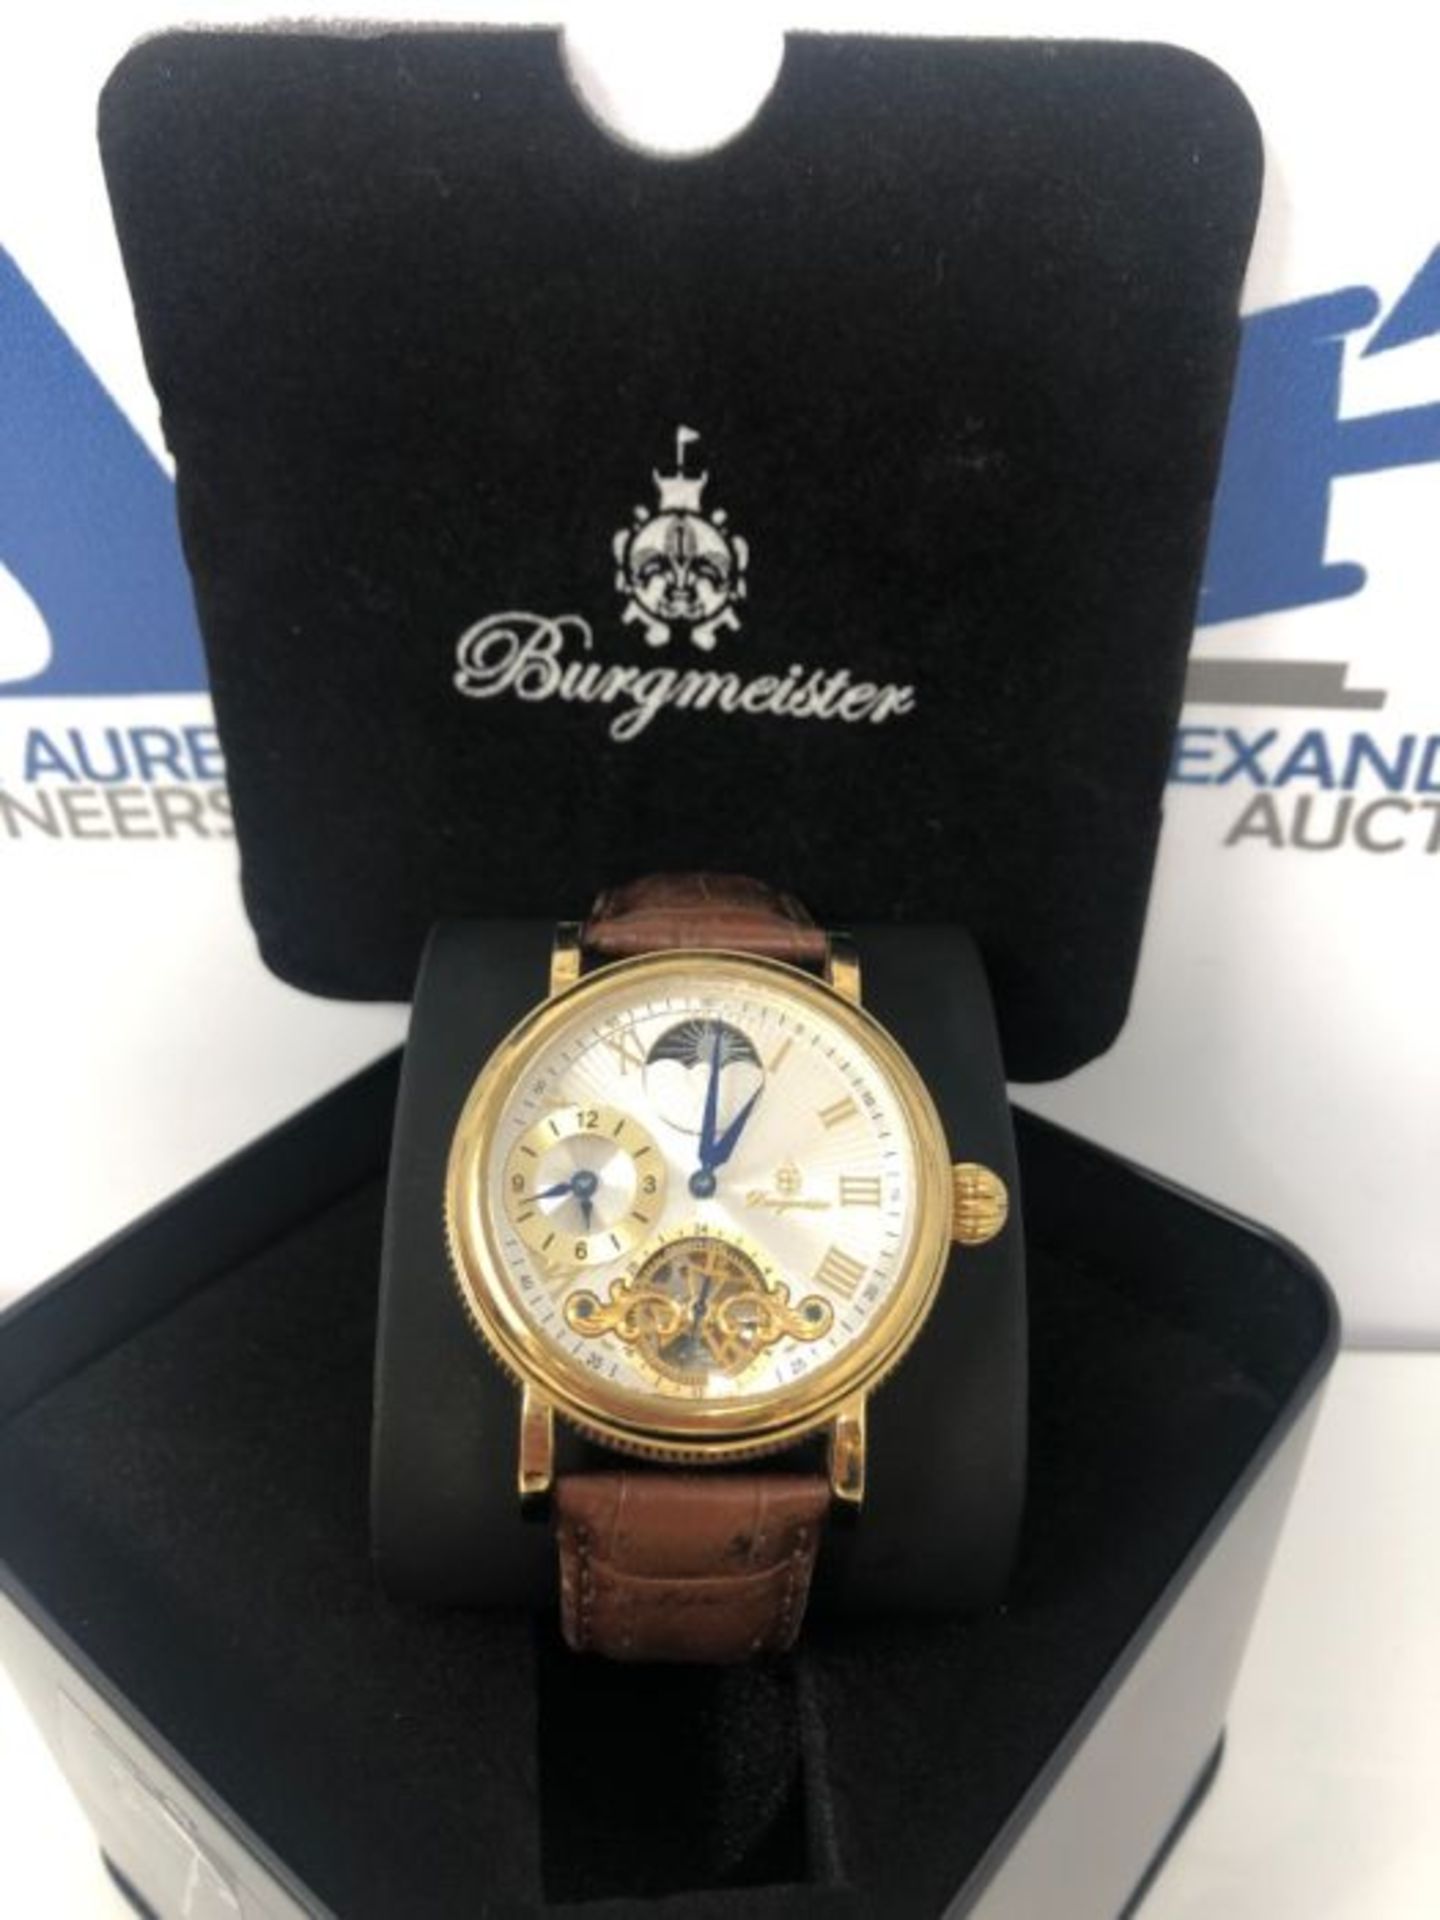 RRP £191.00 Burgmeister Armbanduhr fÃ¼r Herren mit Analog Anzeige, Automatik-Uhr und Lederarmban - Image 2 of 3